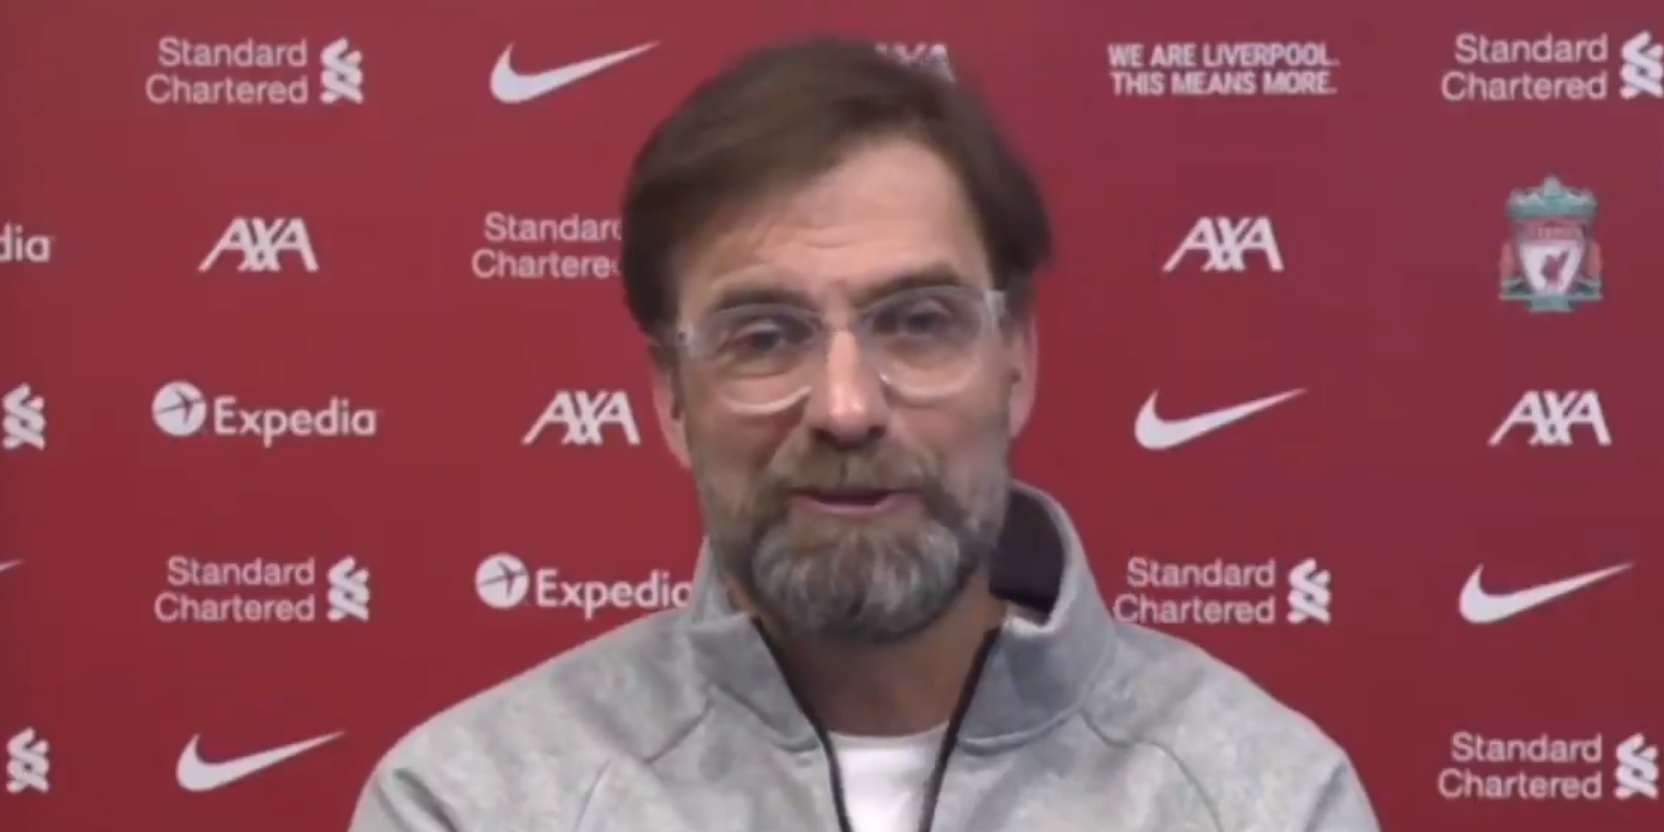 Jurgen Klopp suggests Liverpool will block players from going on international duty